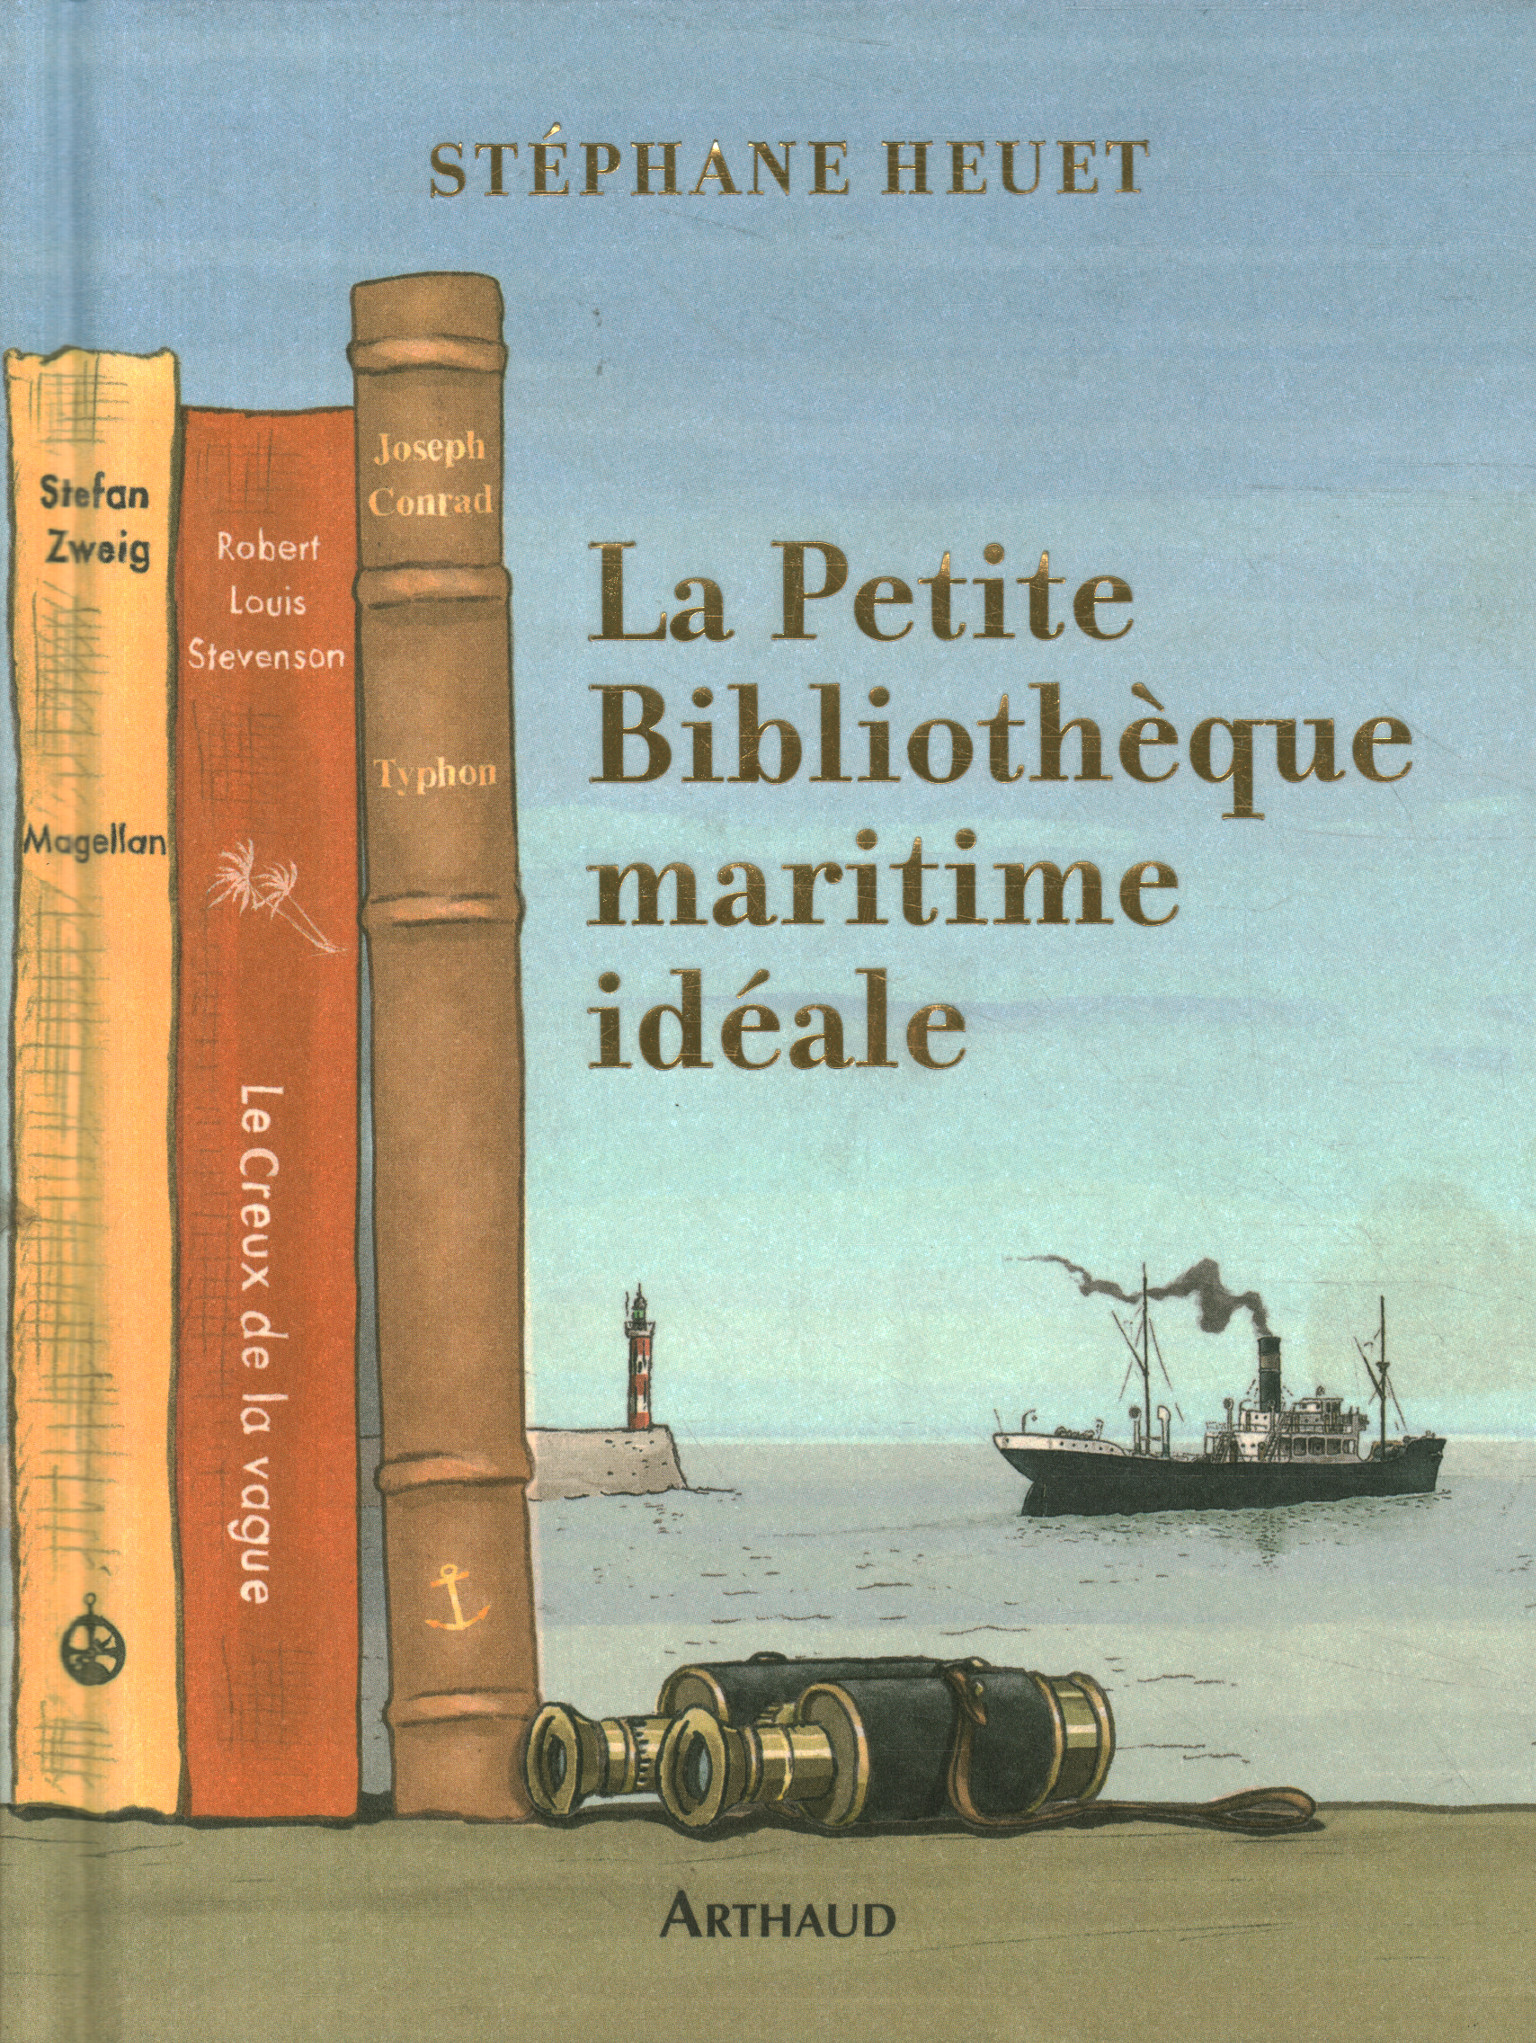 identifiant La Petite Bibliothèque maritime, identifiant La Petite Bibliothèque maritime